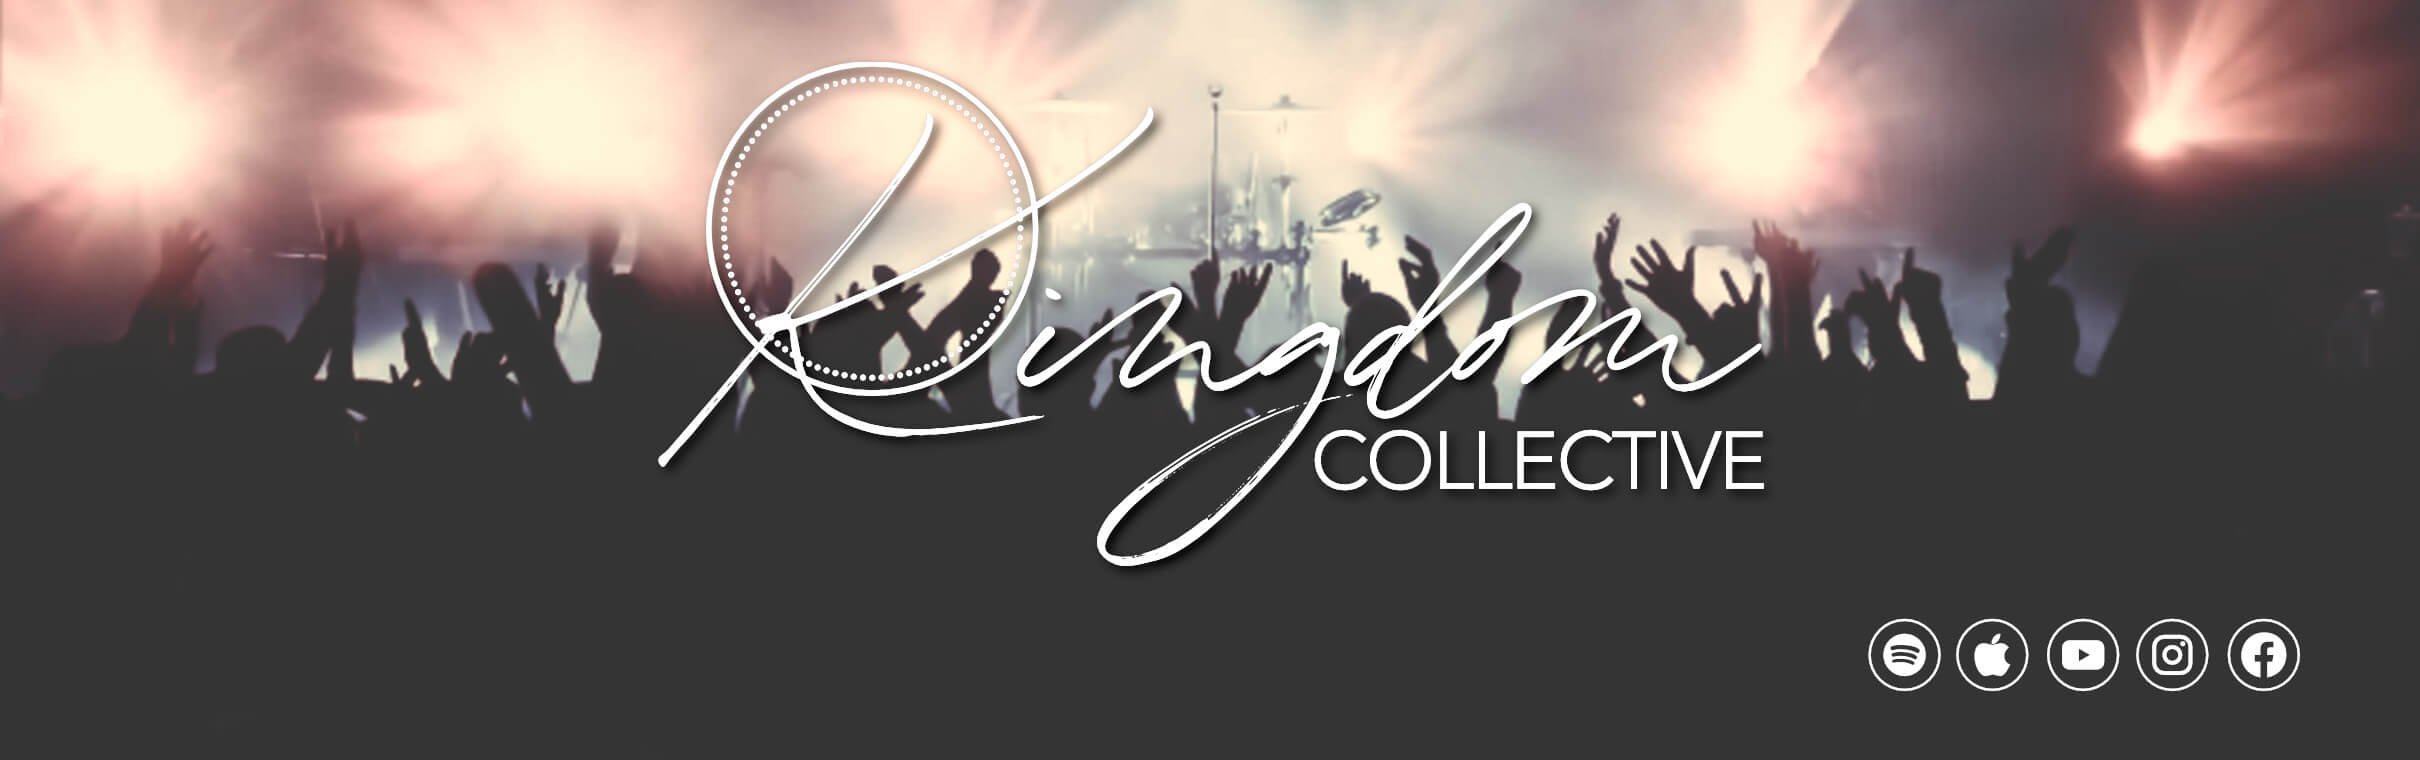 Kingdom Collective